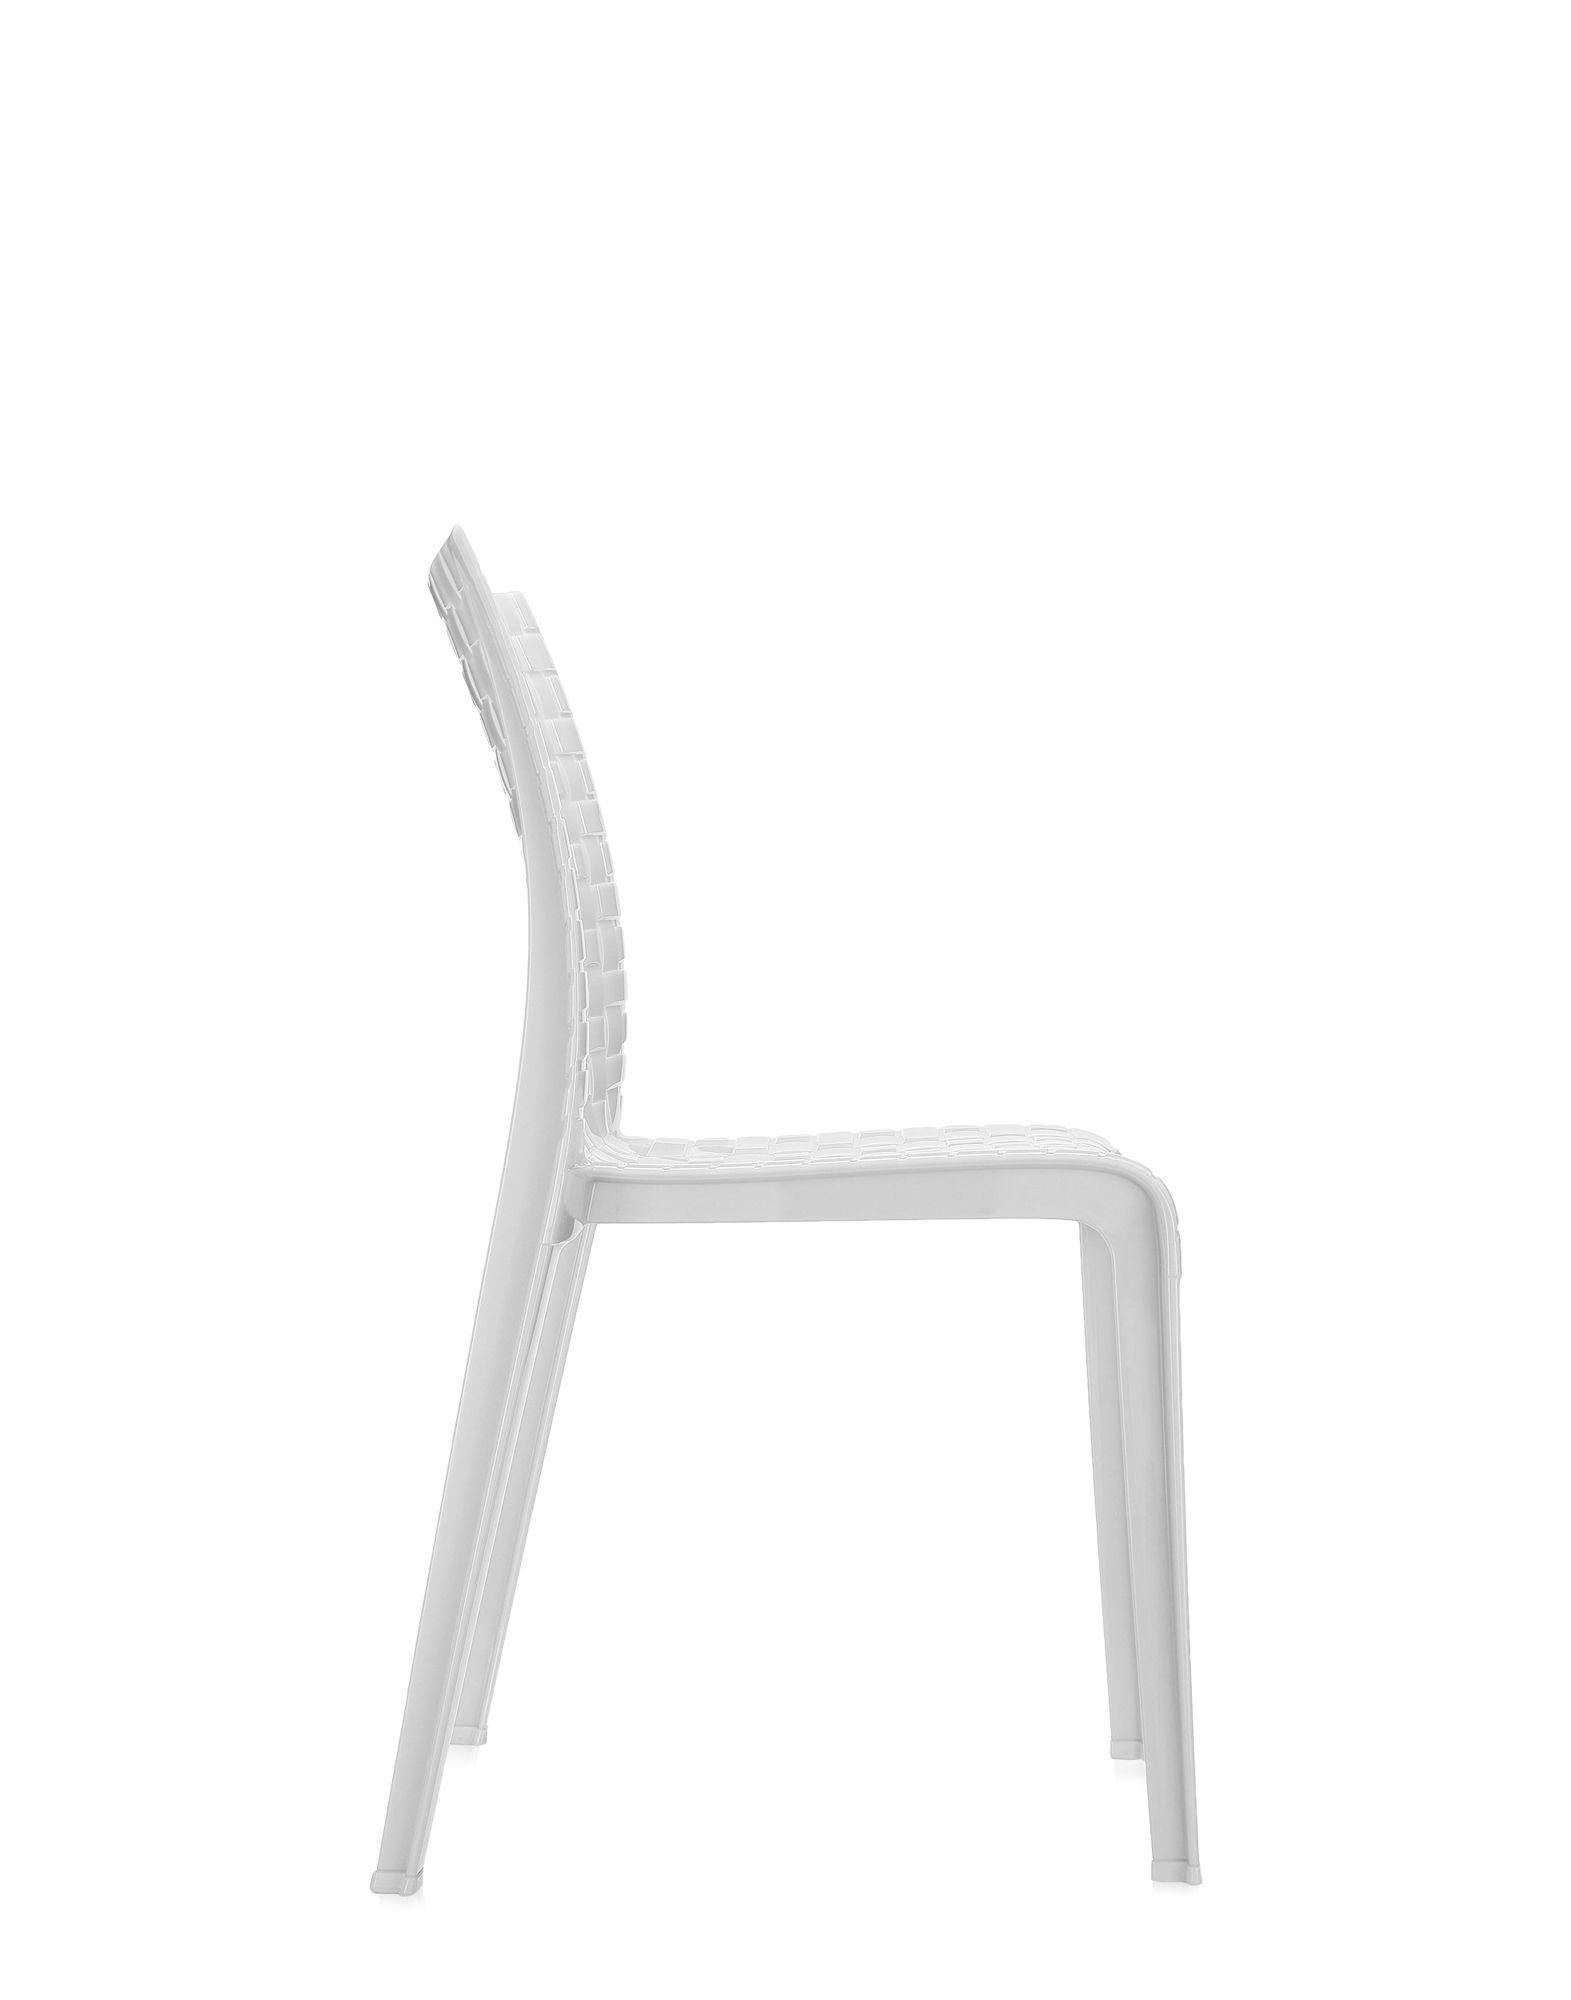 Italian Kartell Ami Ami Chair in Glossy White by Tokujin Yoshioka For Sale